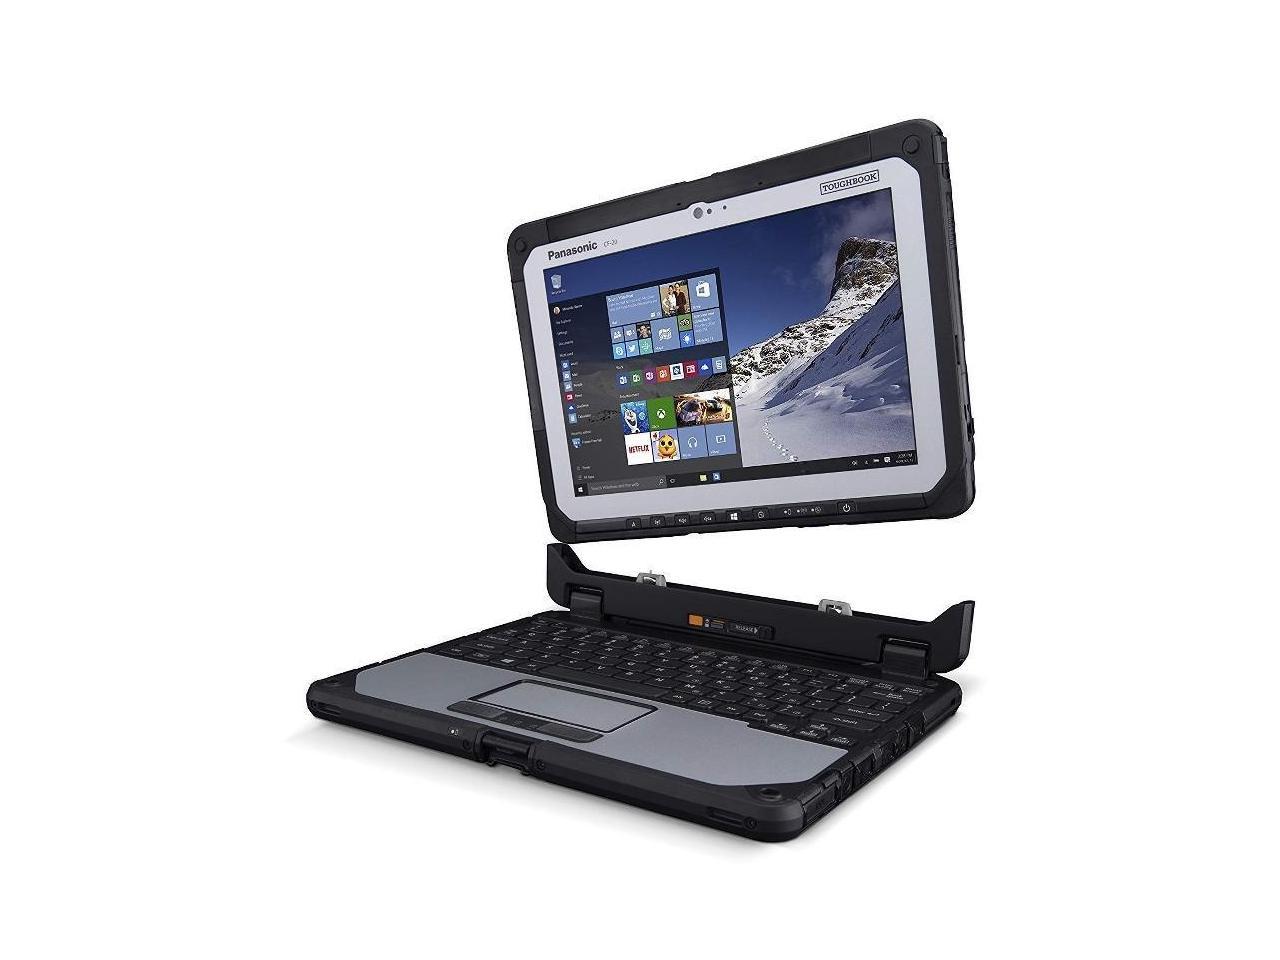 Panasonic Toughbook CF-20, Rugged Laptop (2 in 1), 10.1